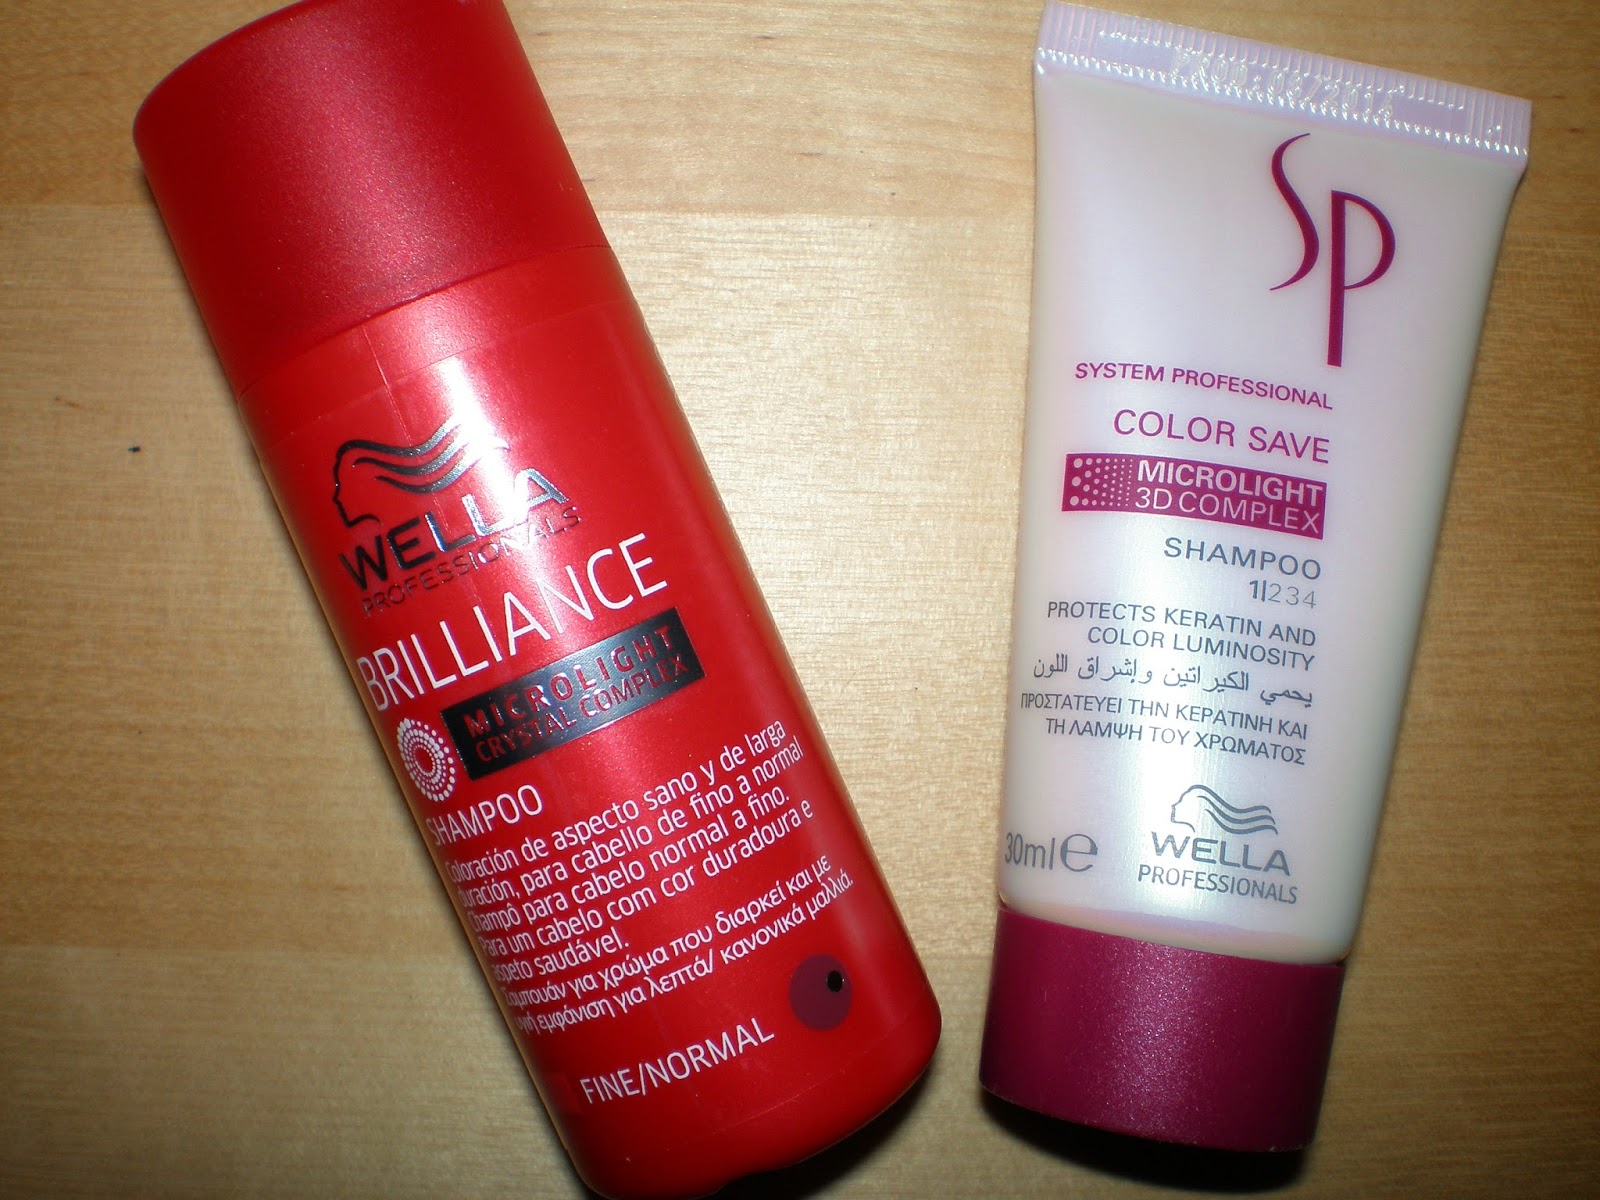 Wella Brilliance Shampoo For Fine/Normal Hair and Wella SP Color Save shampoo